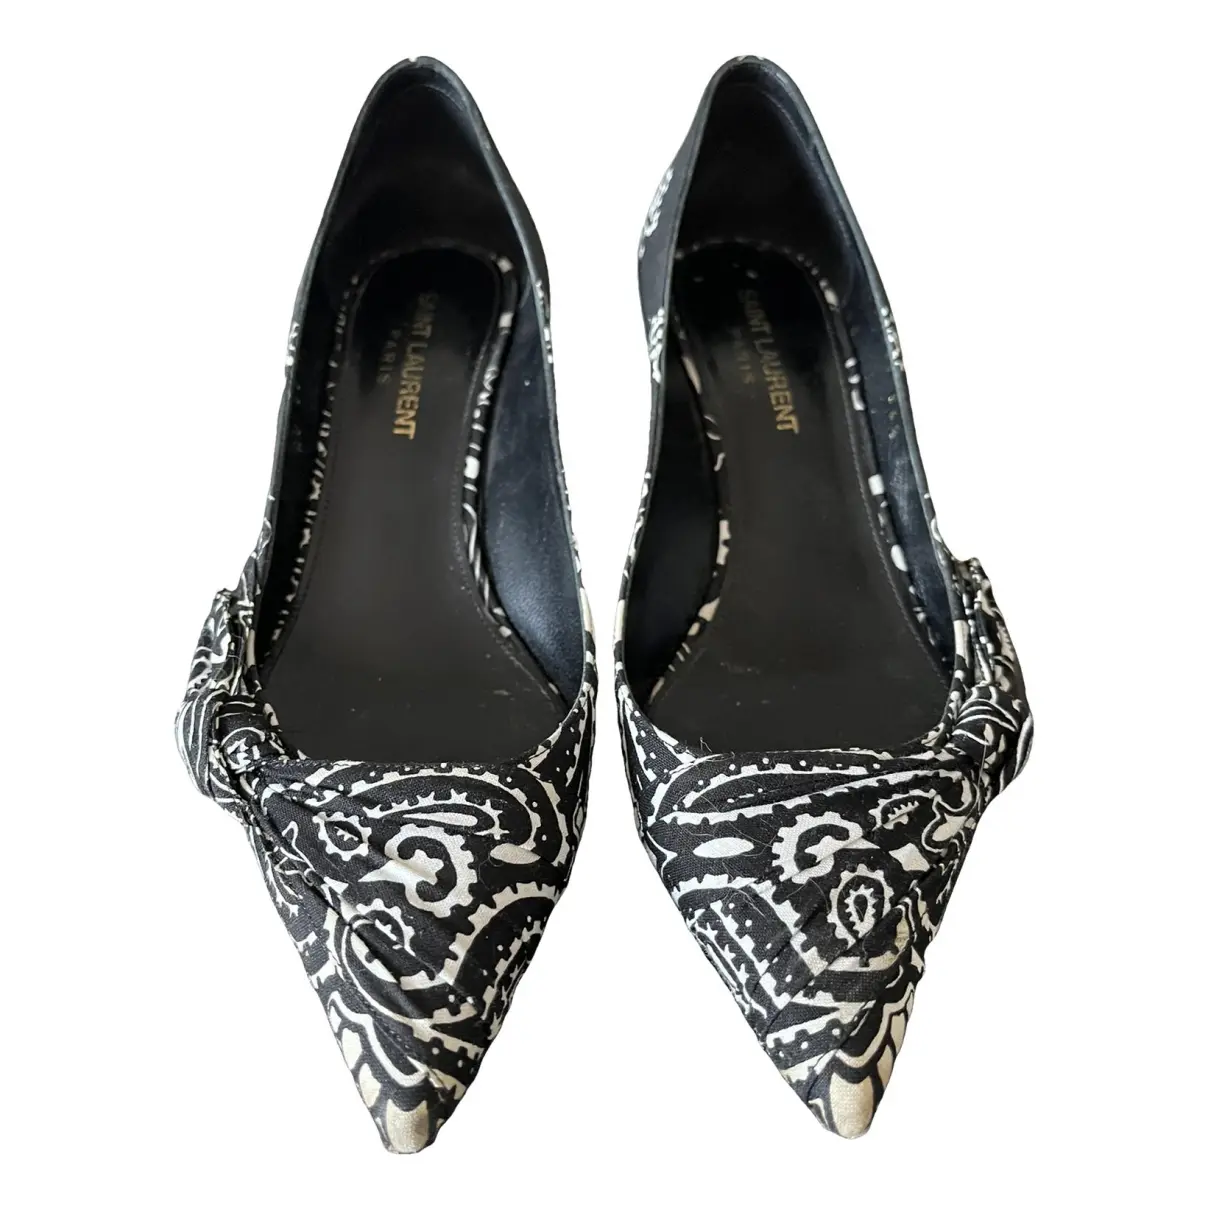 Charlotte cloth heels